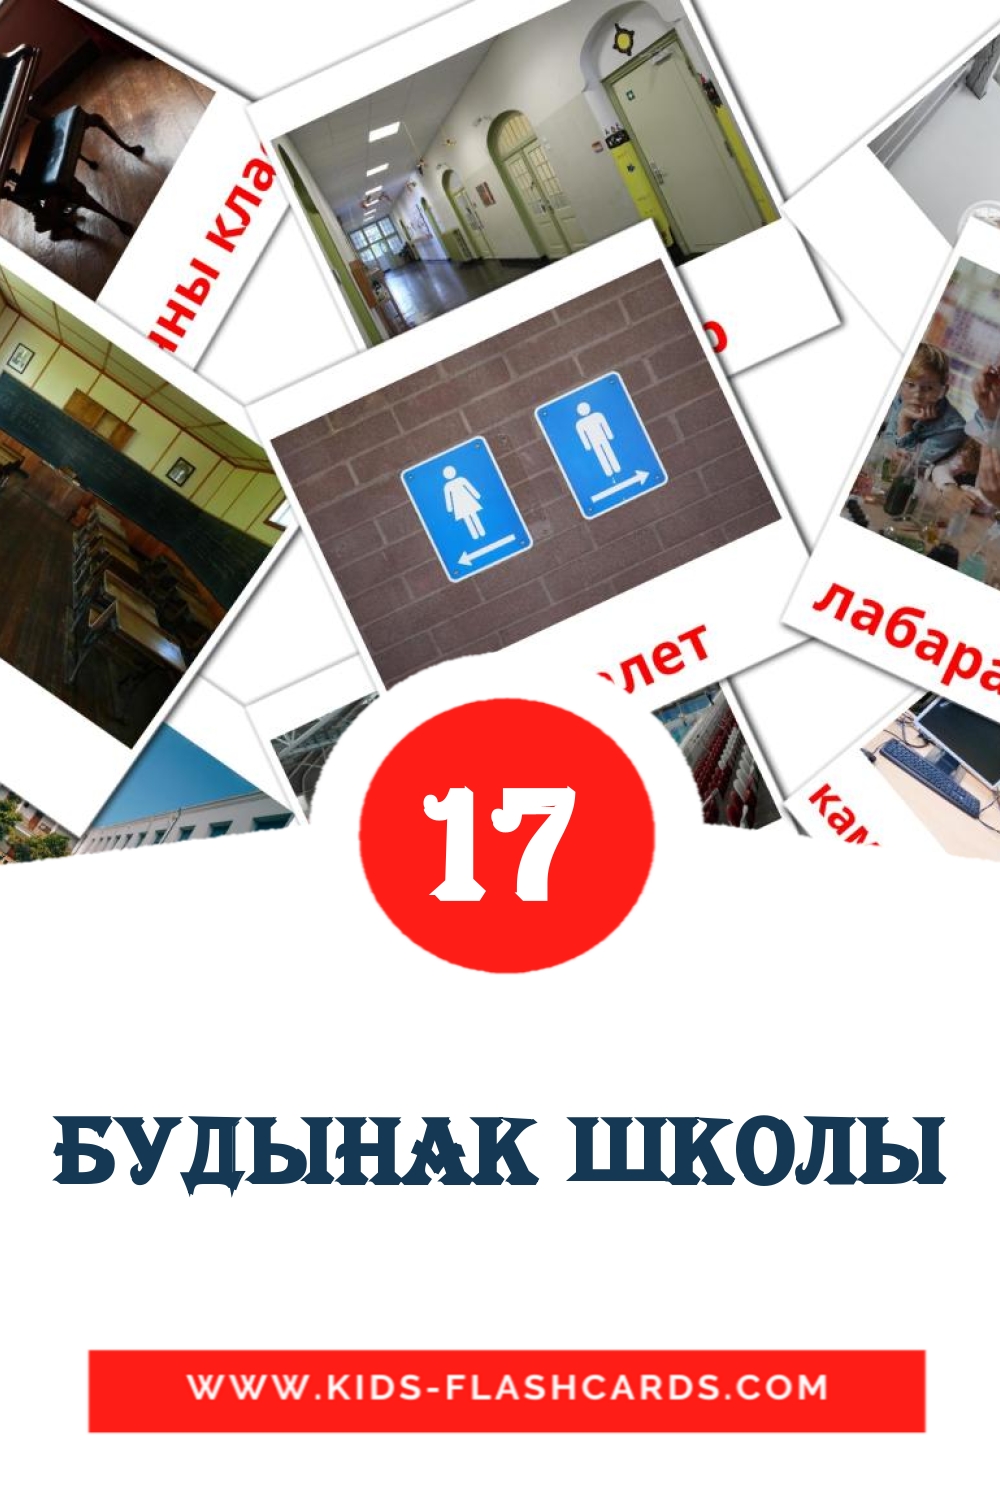 17 carte illustrate di Будынак школы per la scuola materna in bielorusso